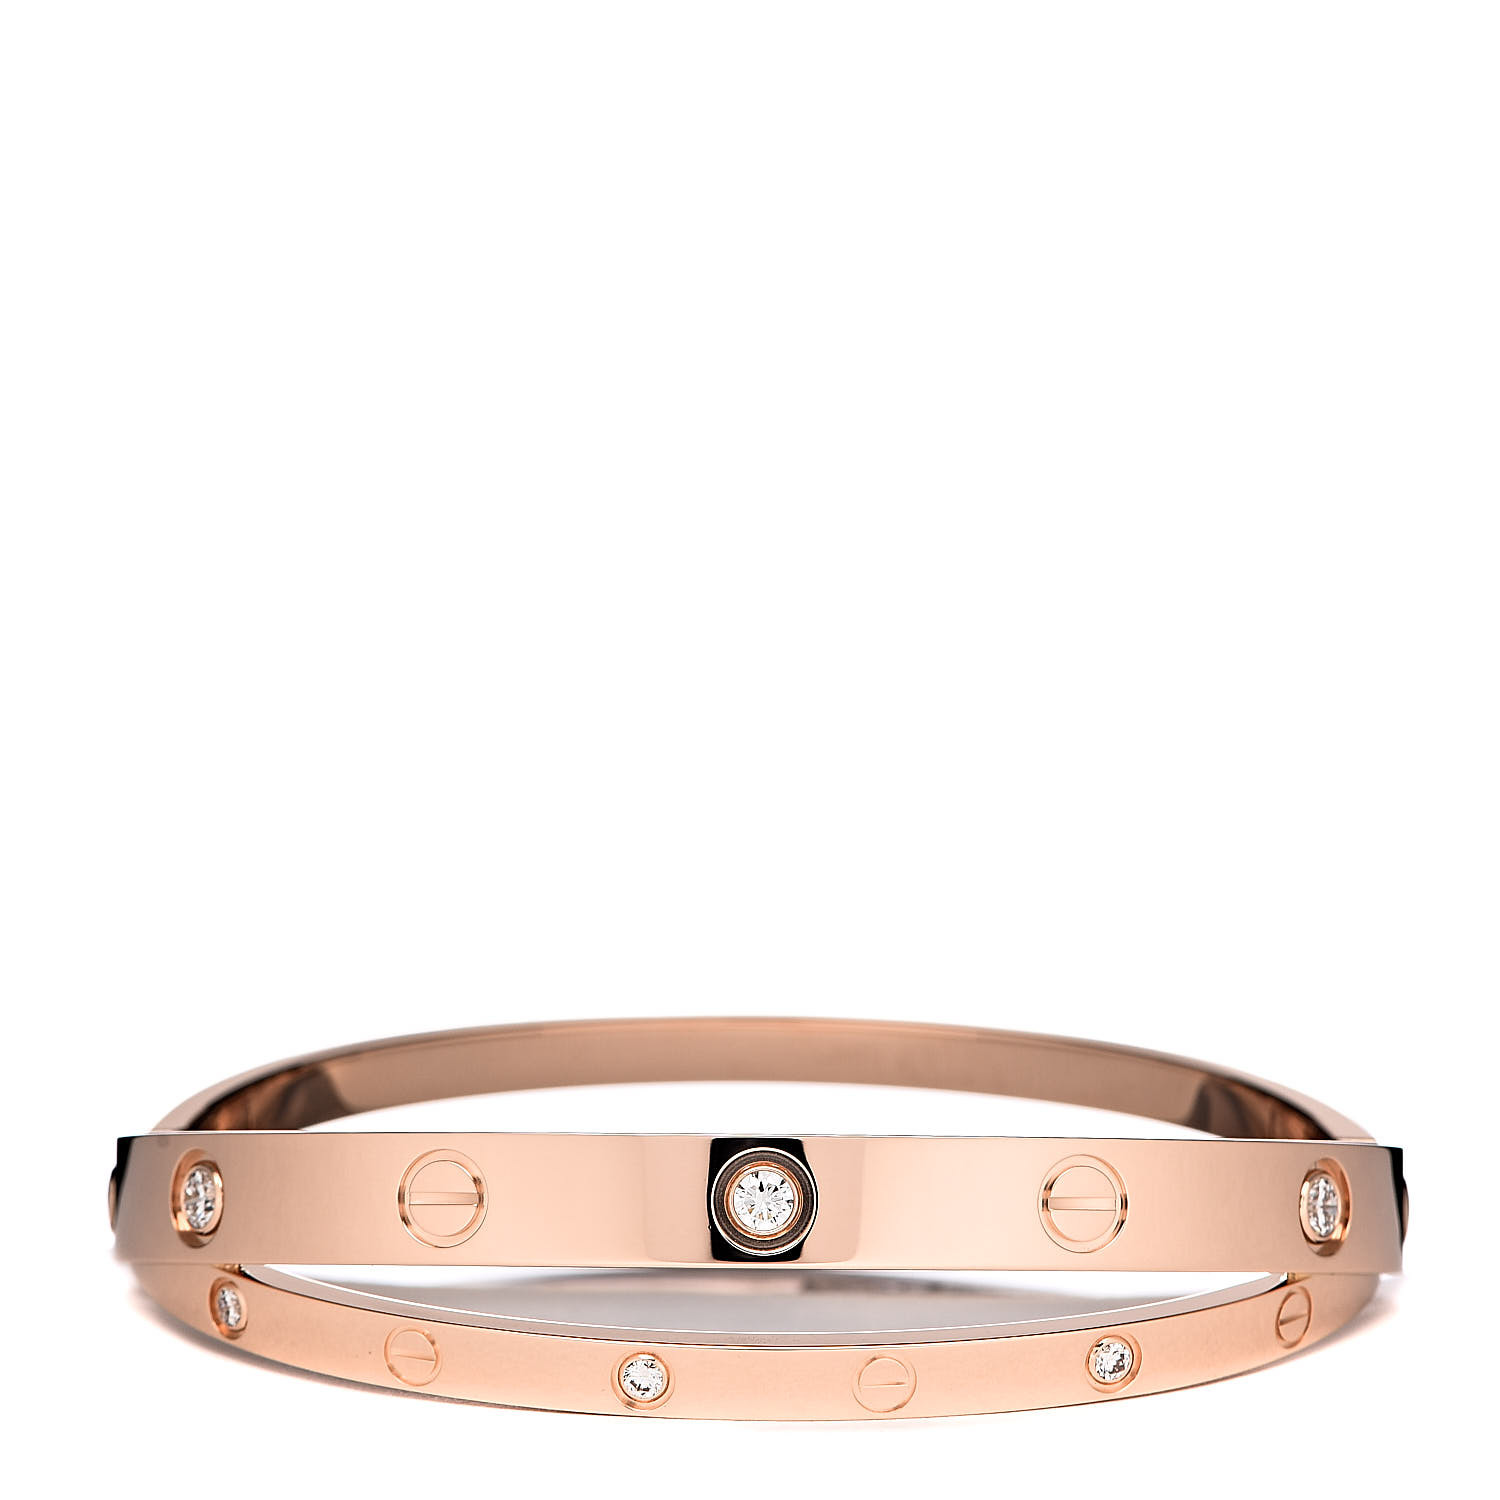 cartier belt bracelet